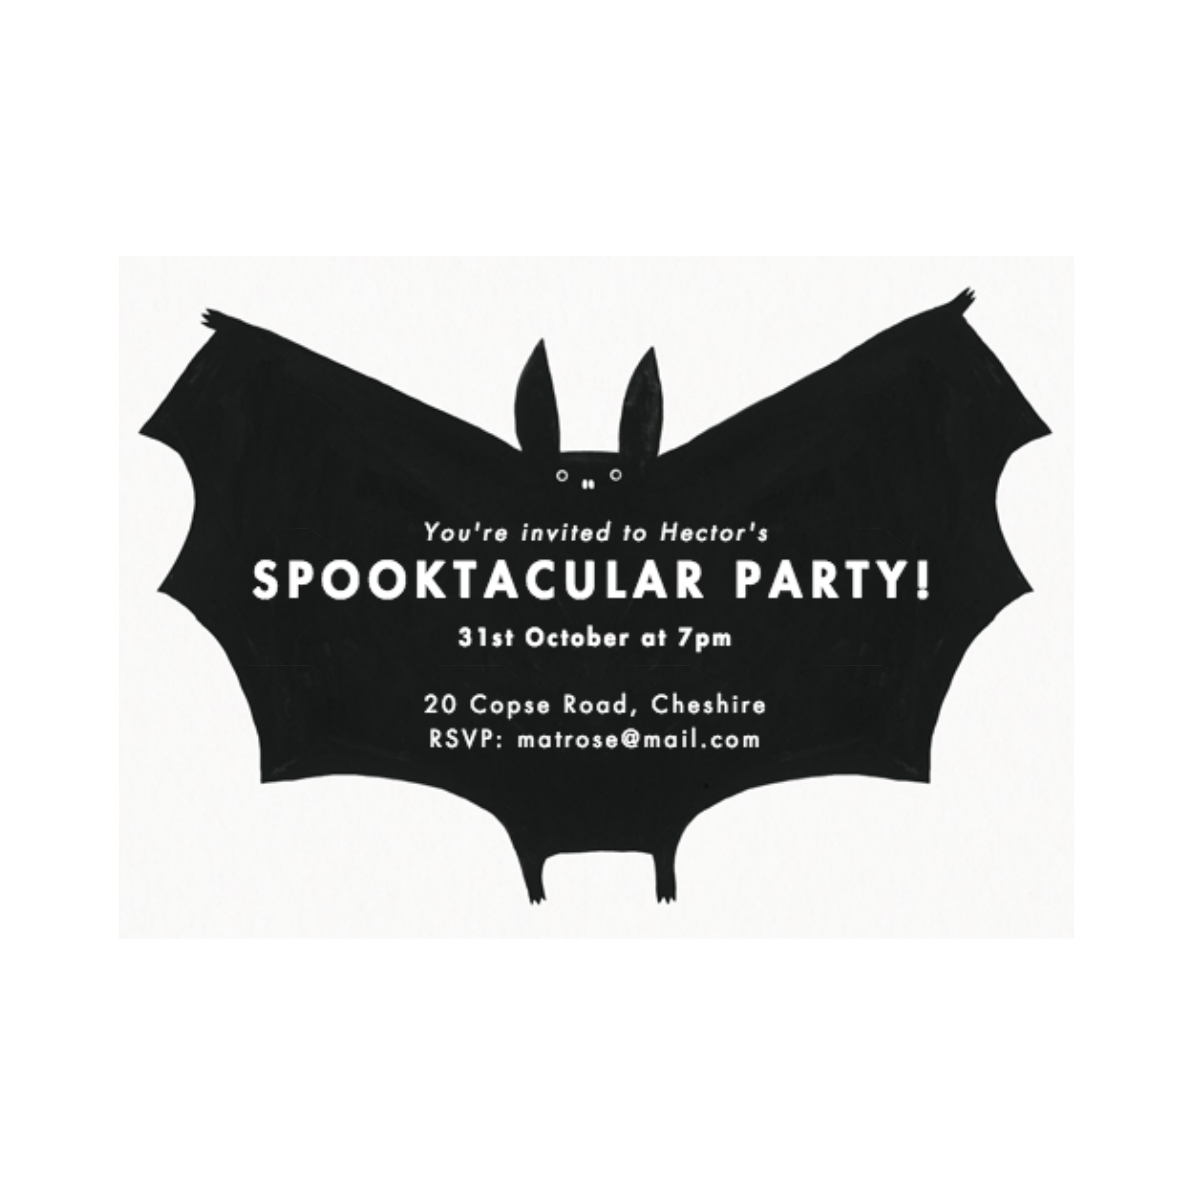 Spooky Bat